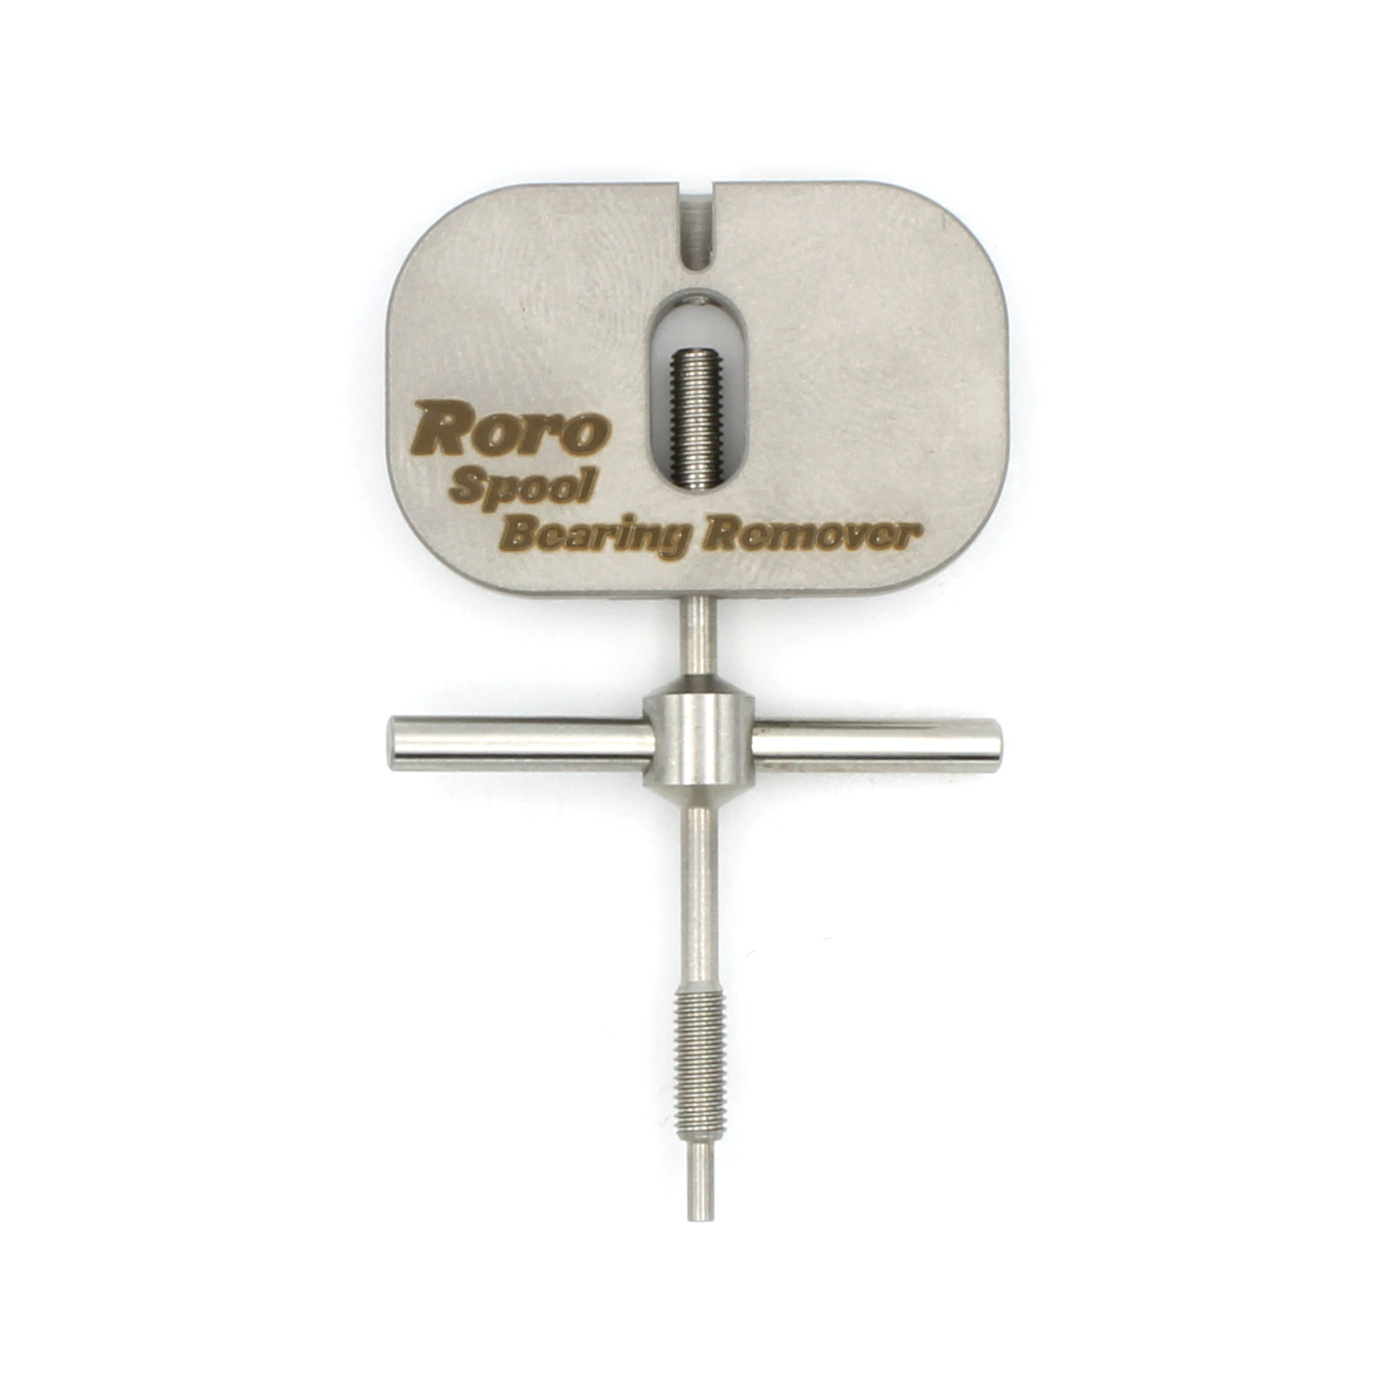 Roro Spool Bearing Pin Removal Tool TX8